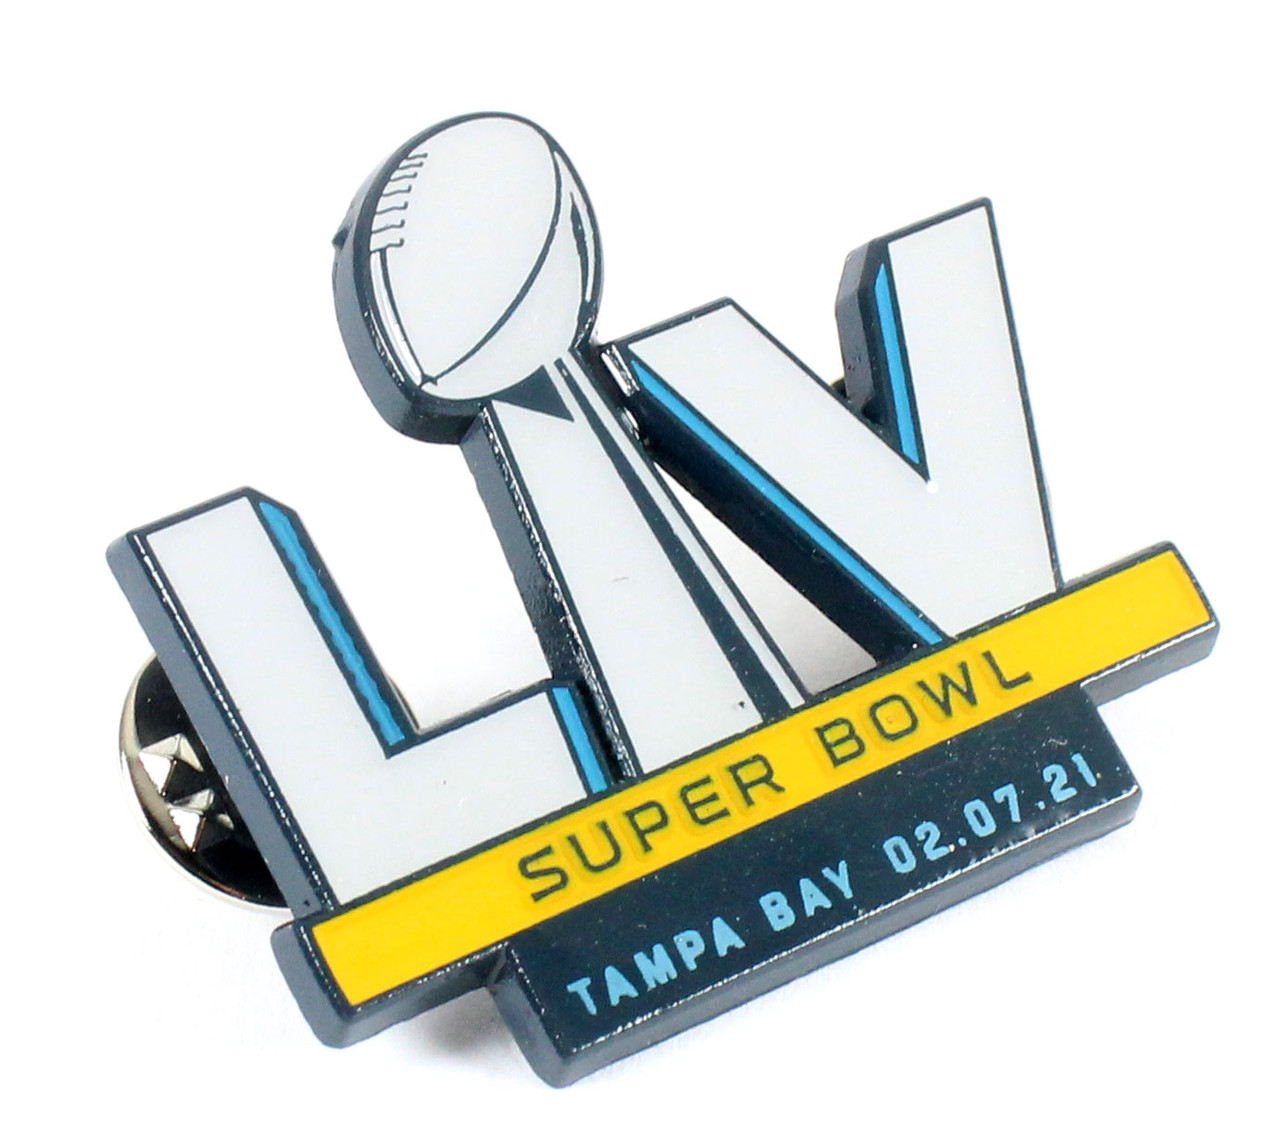 2021 SUPER BOWL LV 55 TAMPA BAY FLORIDA Super Bowl LV 2021 GAME LOGO PATCH